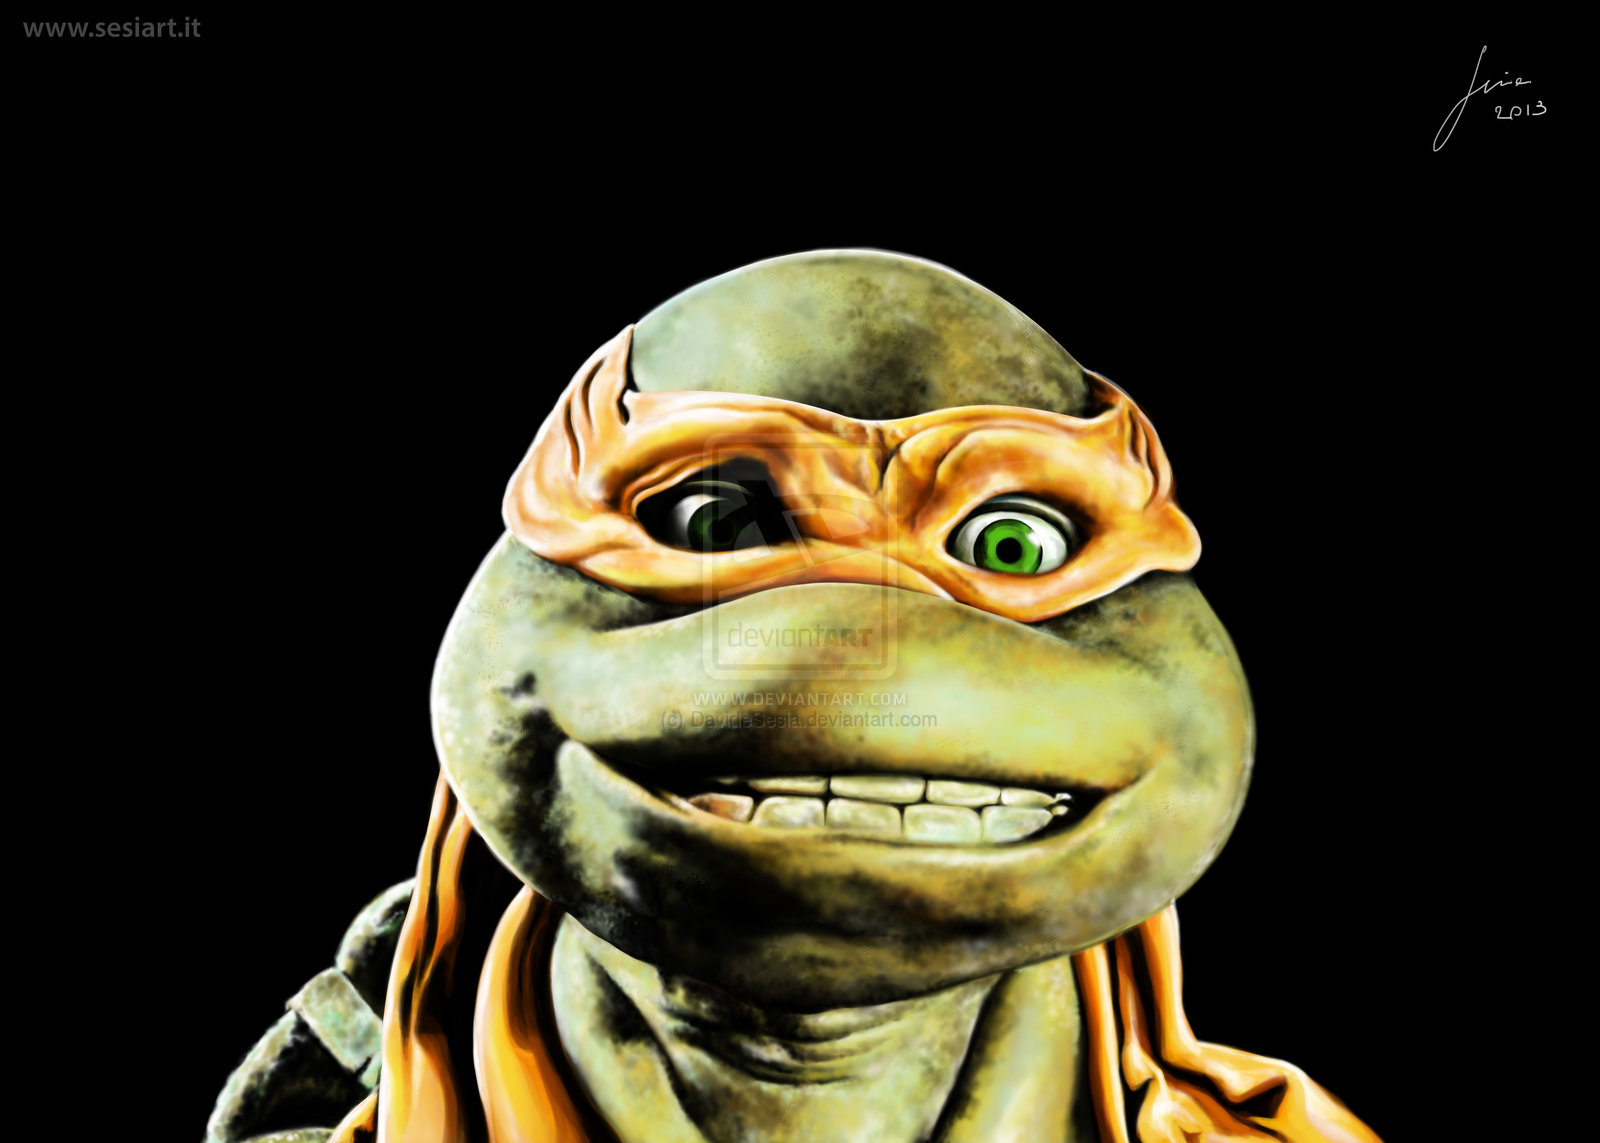 Michelangelo Ninja Turtle Submited Image